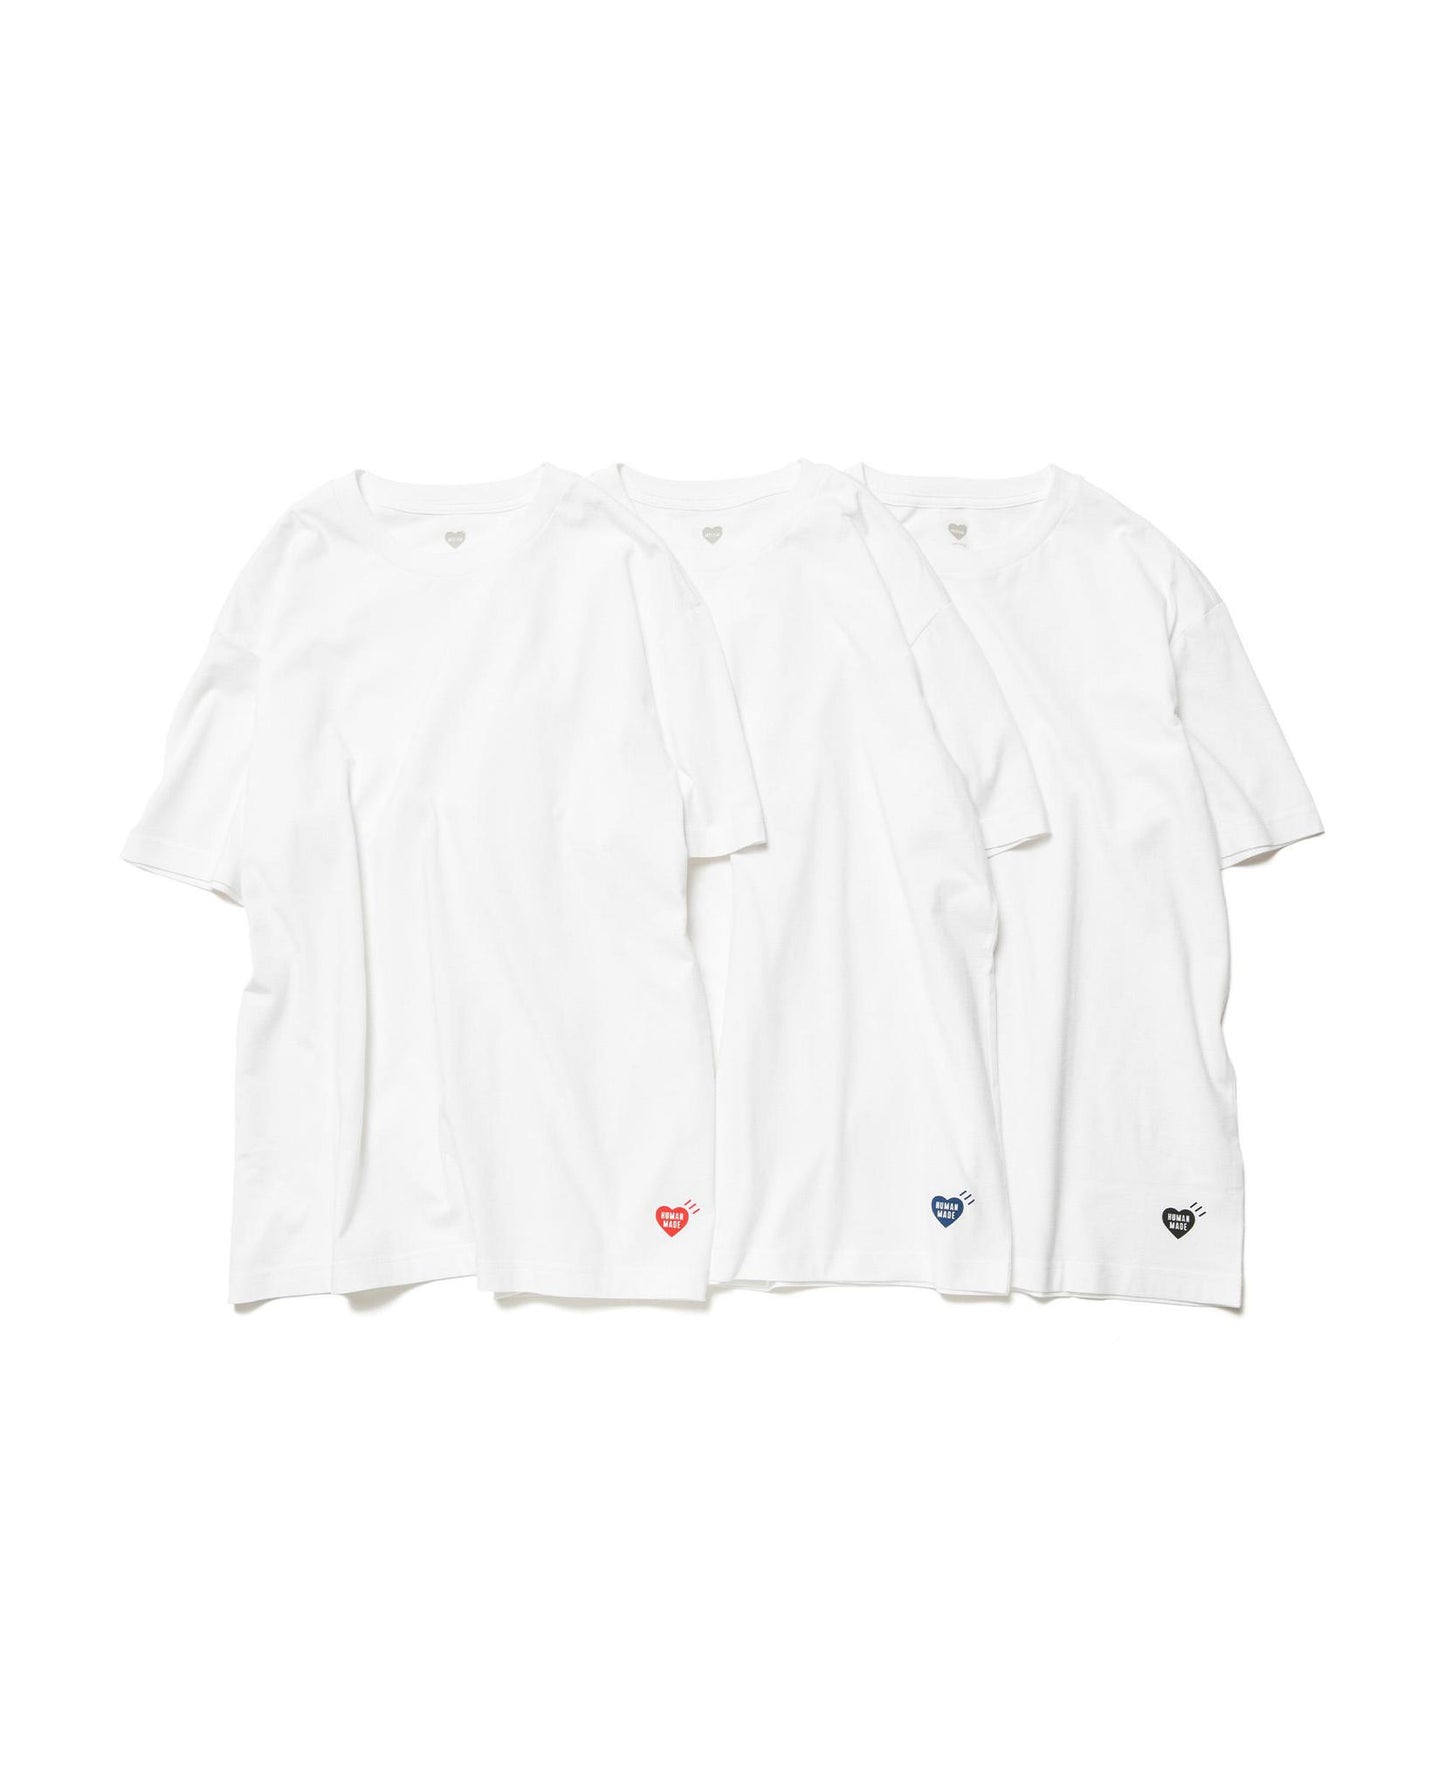 
                    
                      Human Made 3-Pack Tee Shirt Set
                    
                  